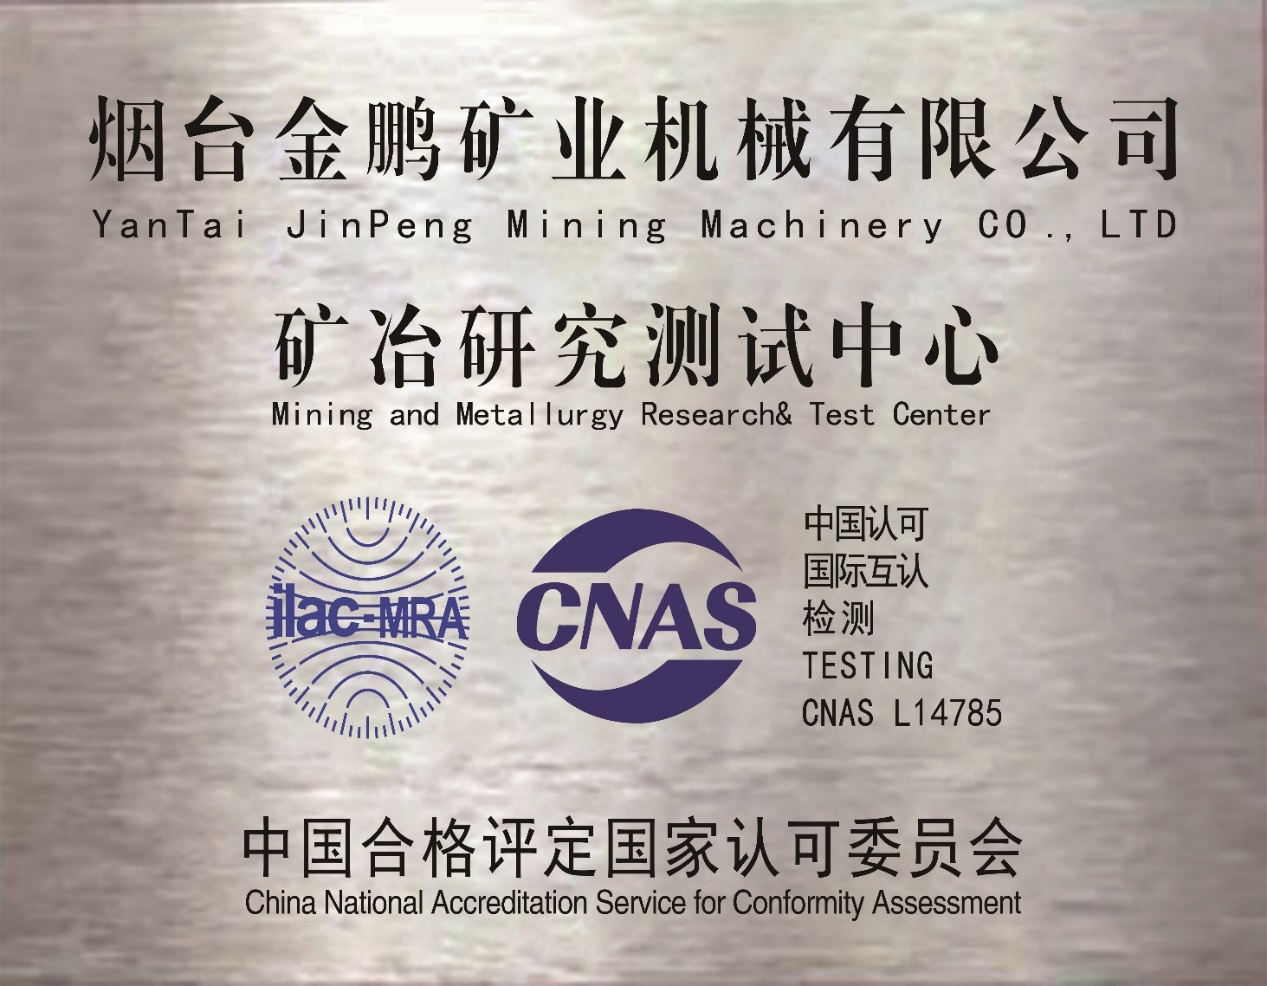 Mining and Metallurgy Research & Test Center of Yantai Jinpeng Mining Machinery Co.,Ltd Winning CNAS Certification！